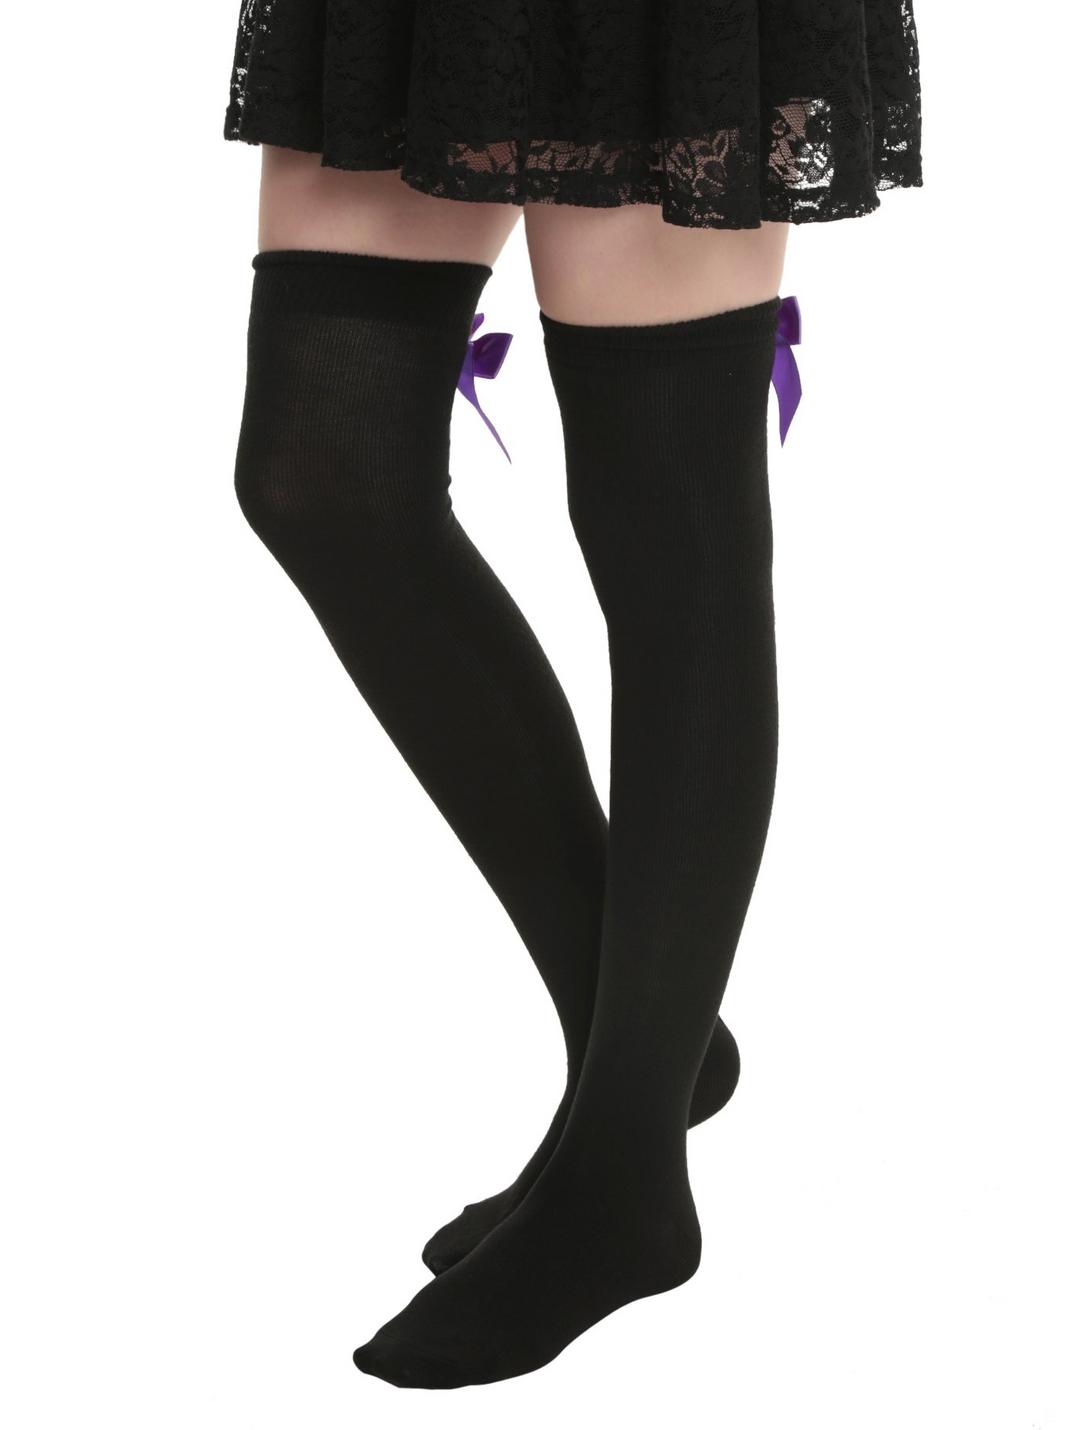 LOVEsick Black And Purple Bow Over-The-Knee Socks, , hi-res